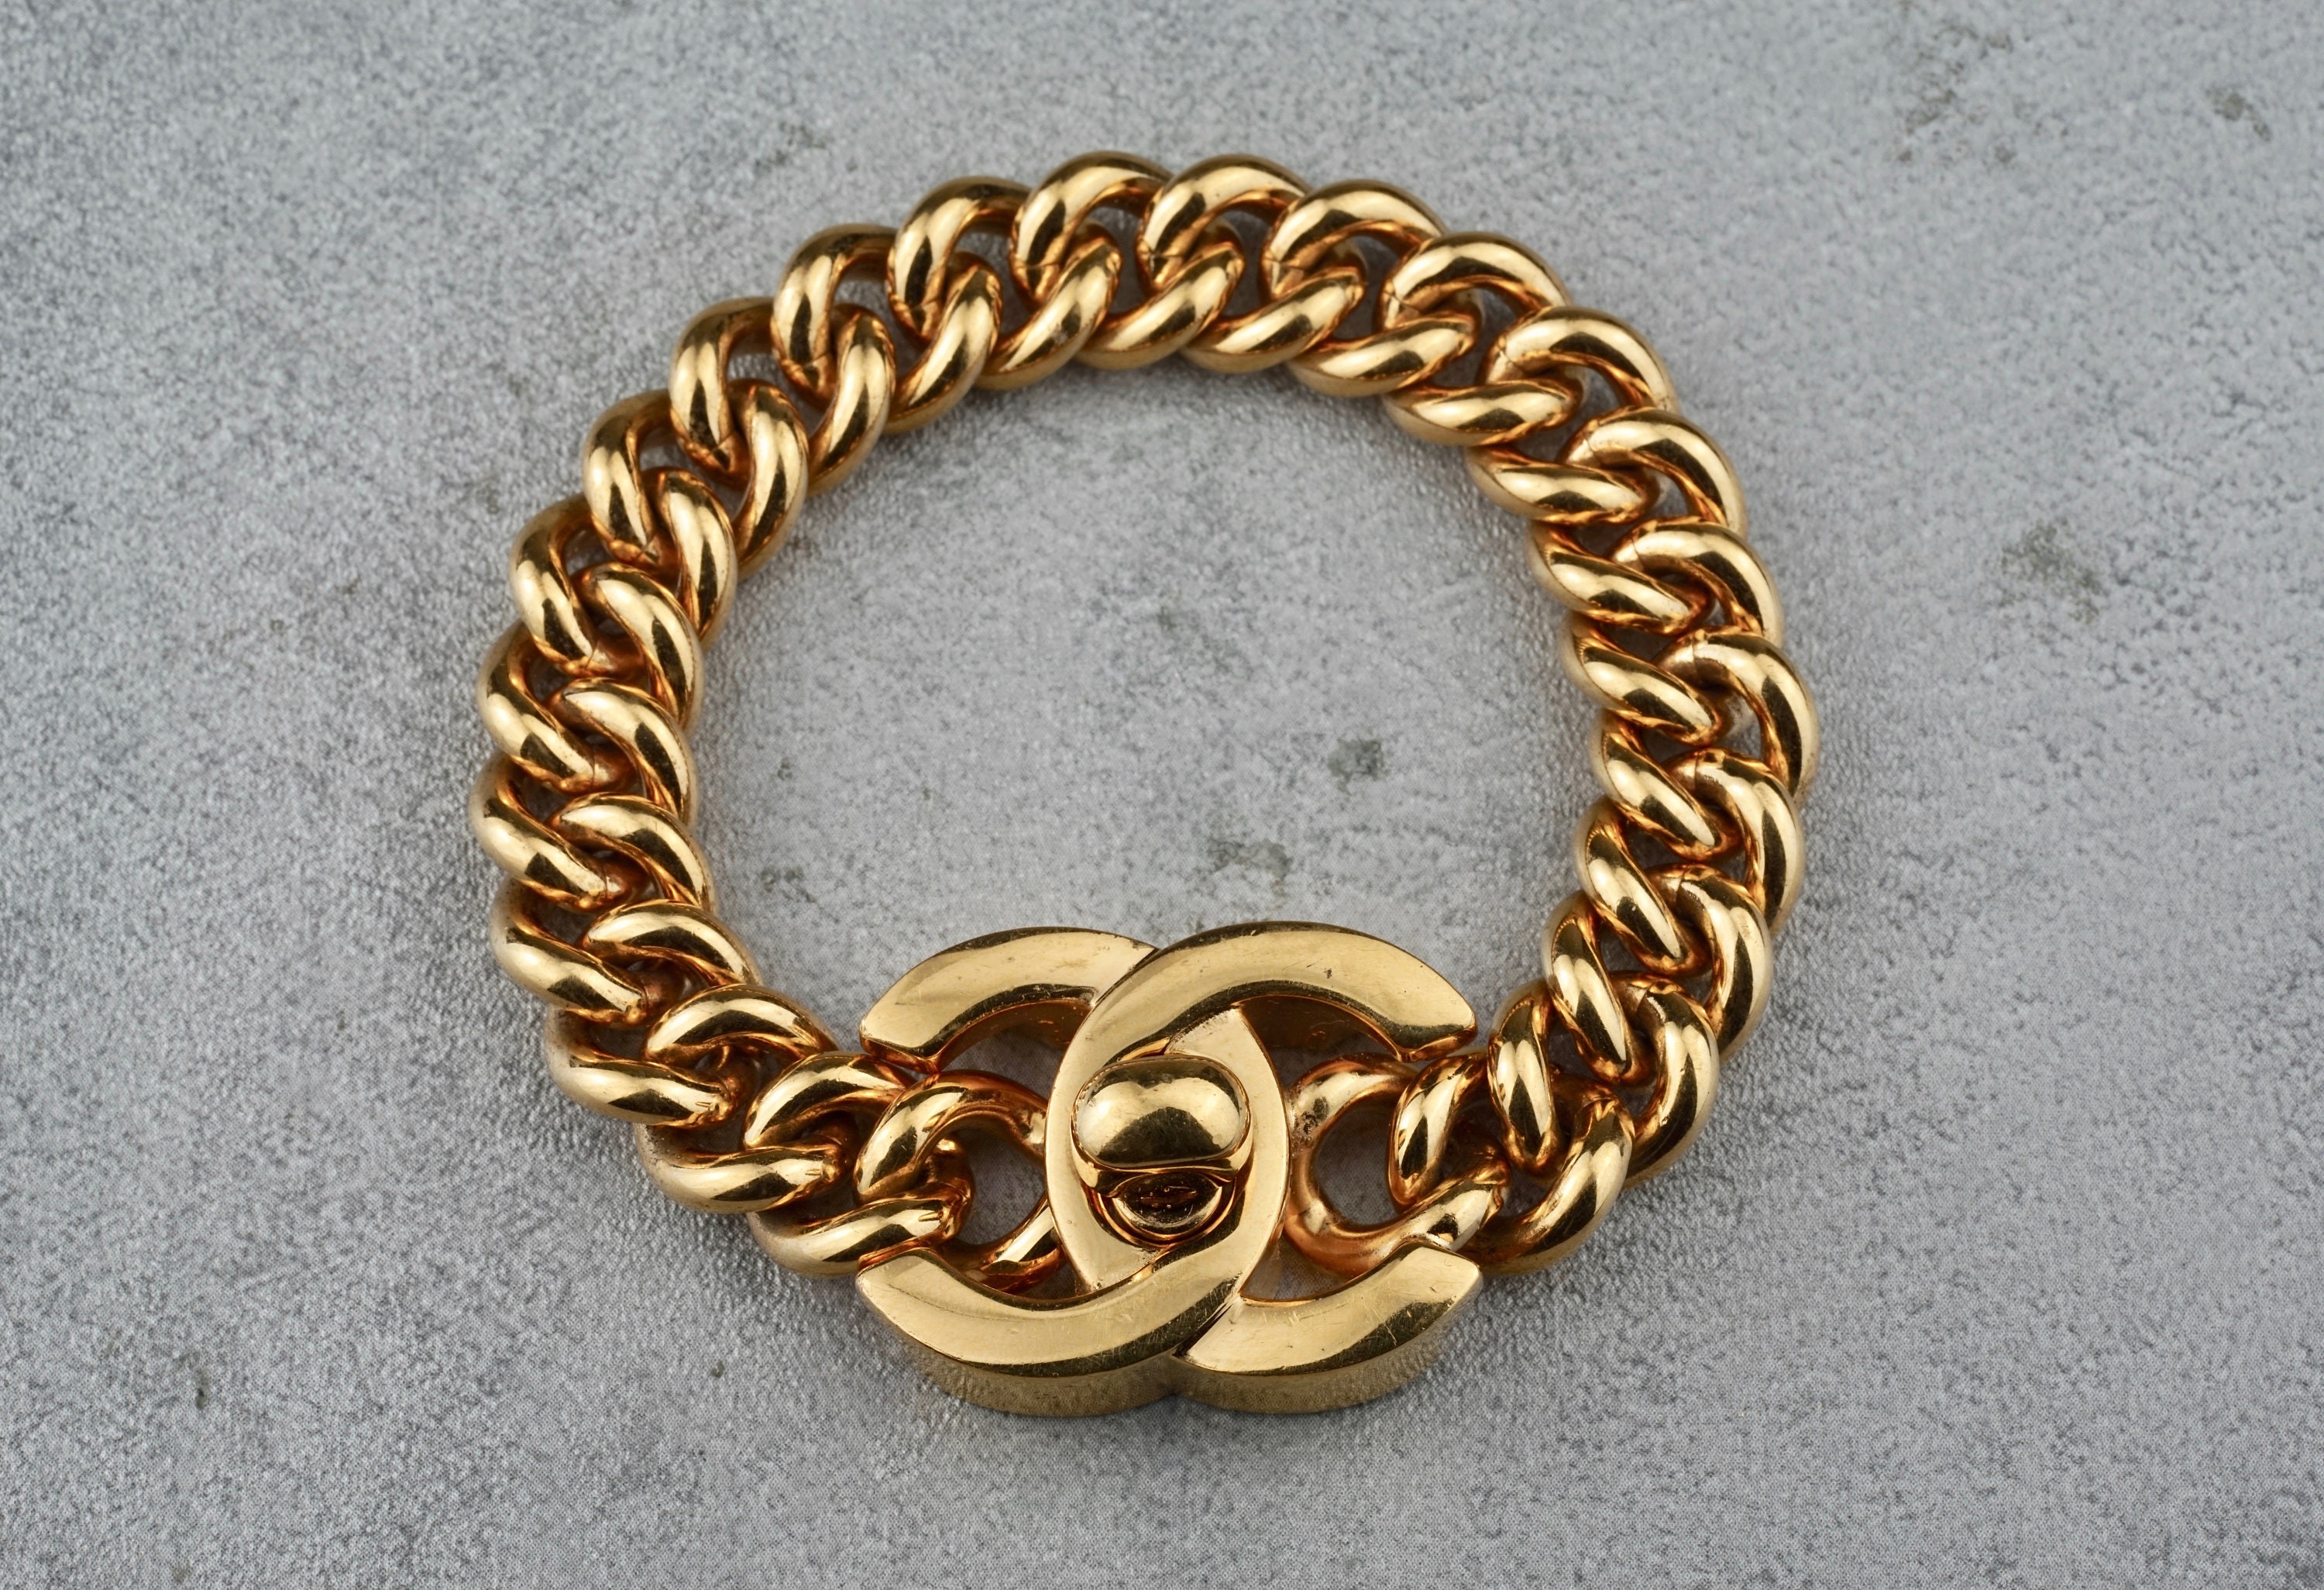 Chanel Vintage CC Turnlock Chain Necklace #jewelryaccessories